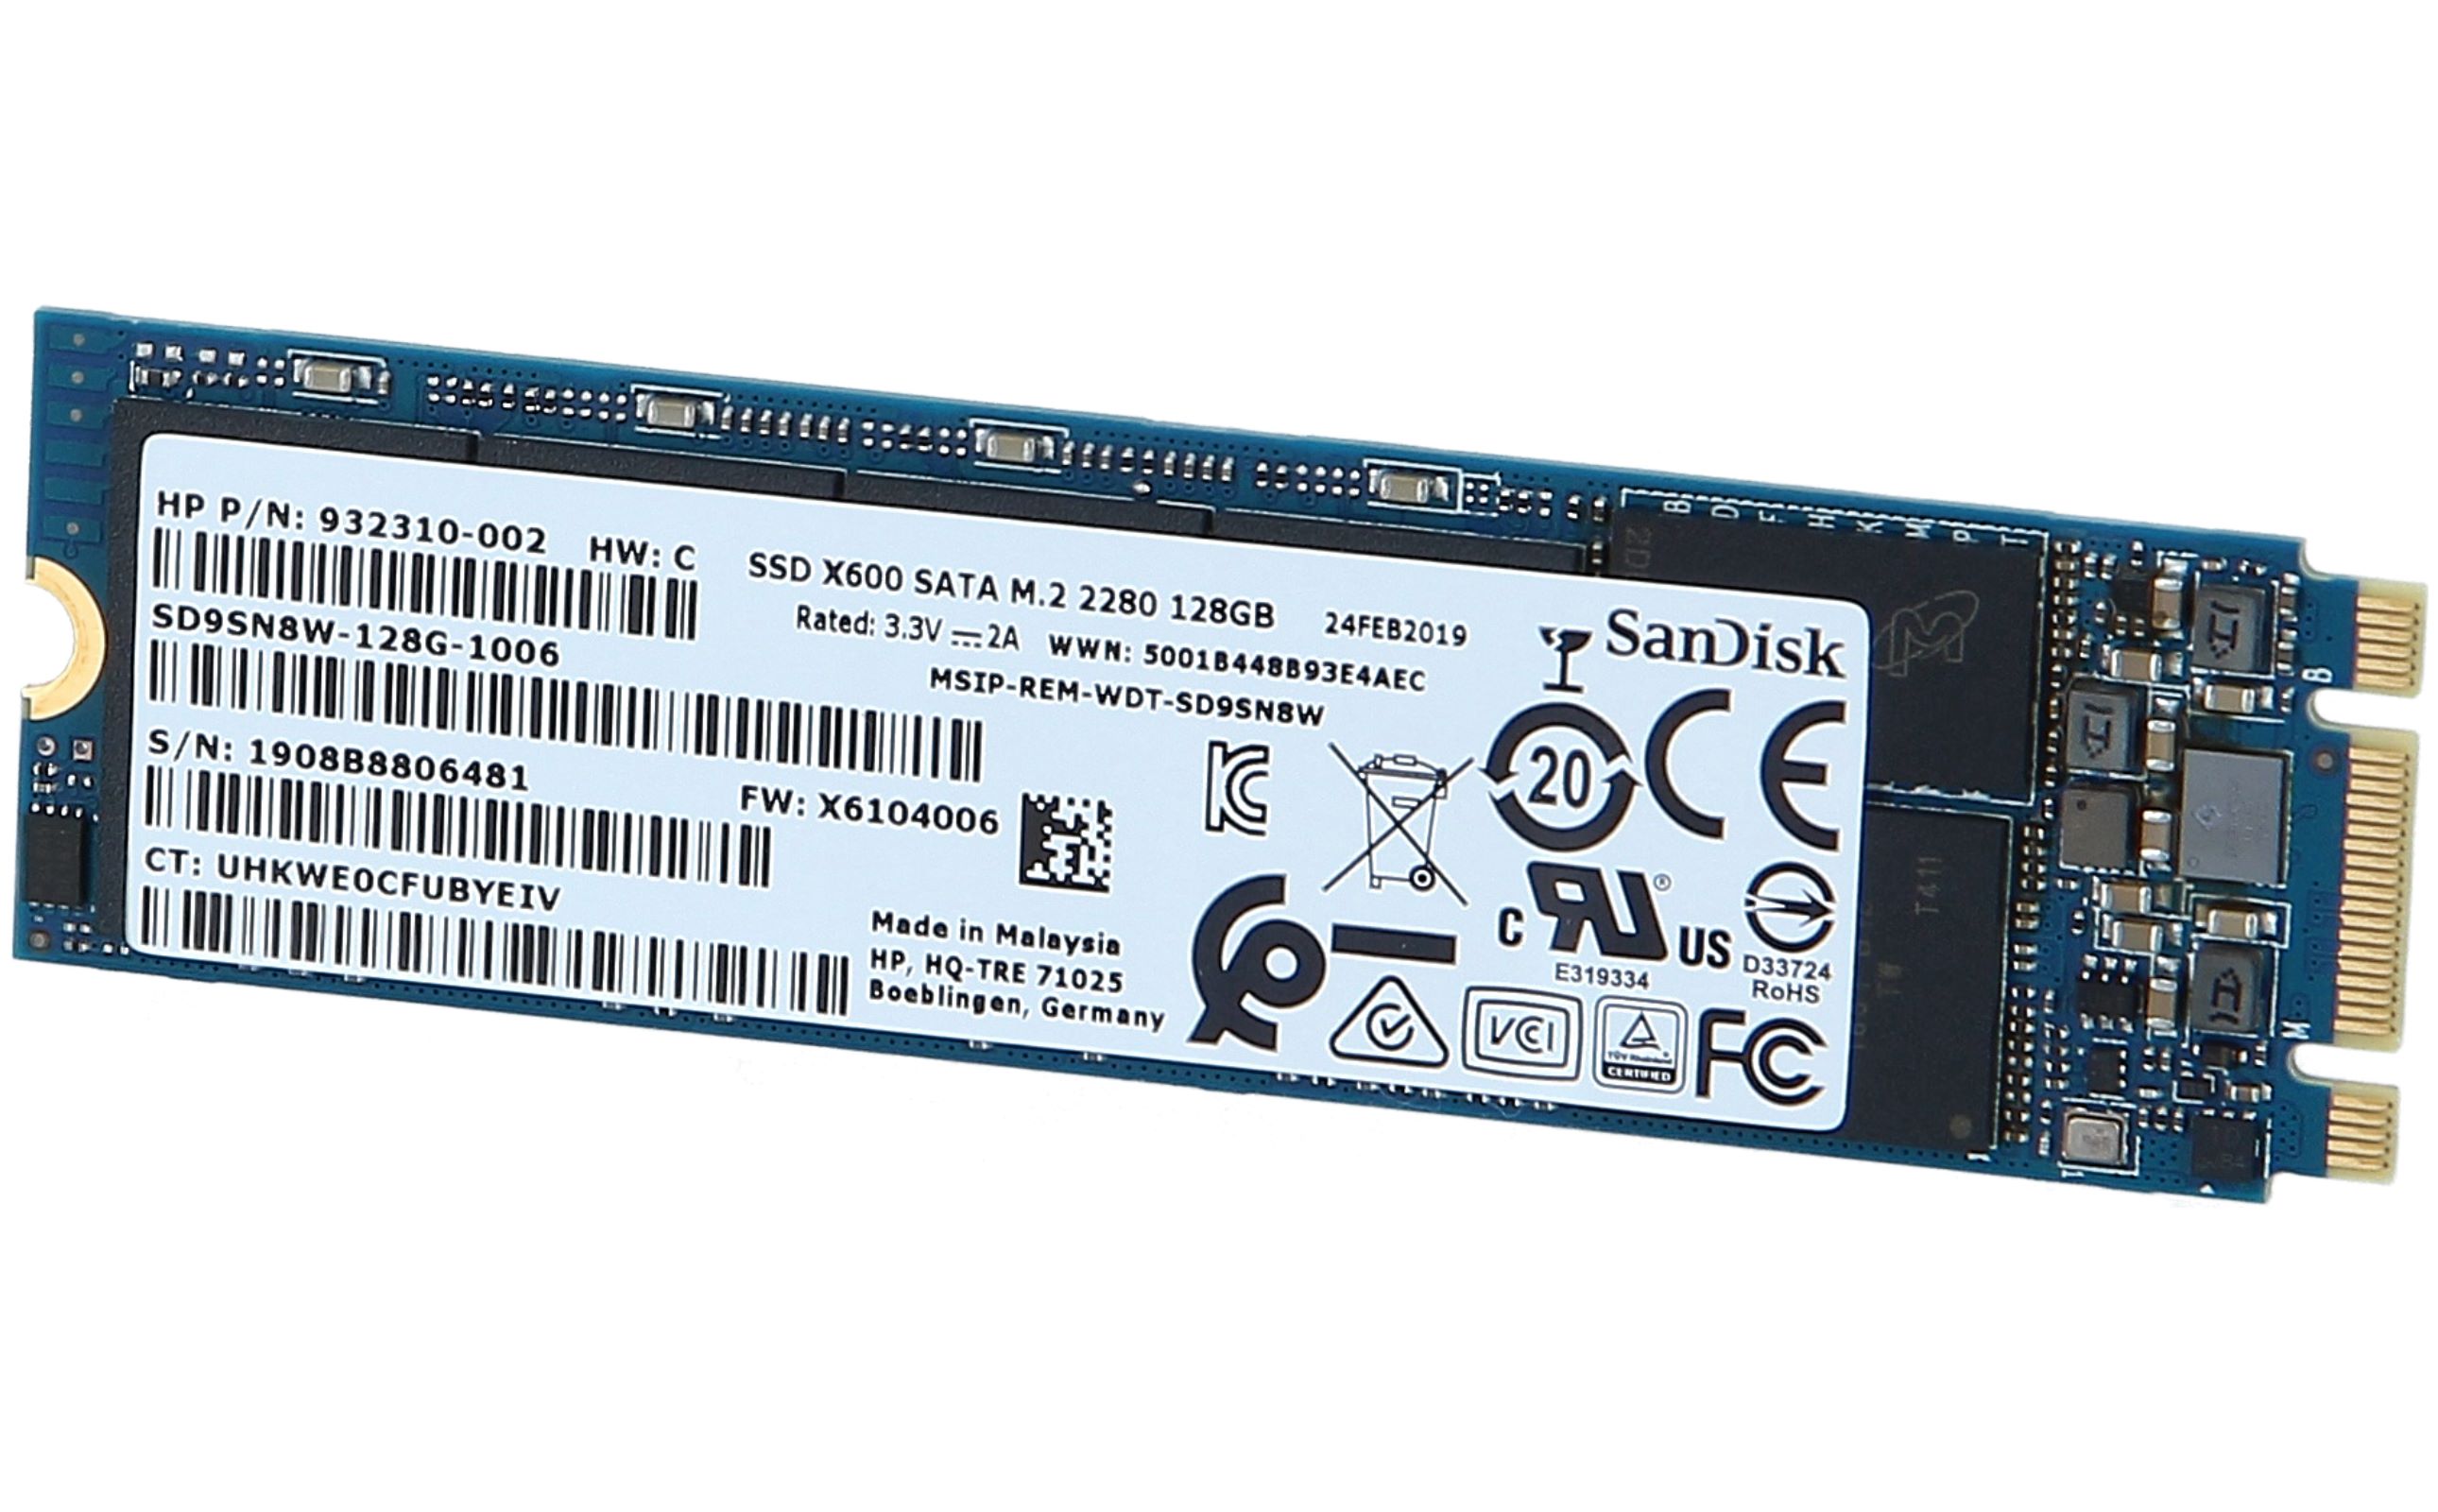 HP 823953-001 - HP 823953-001 Solid State Drive (SSD) 128 GB Serial ATA III